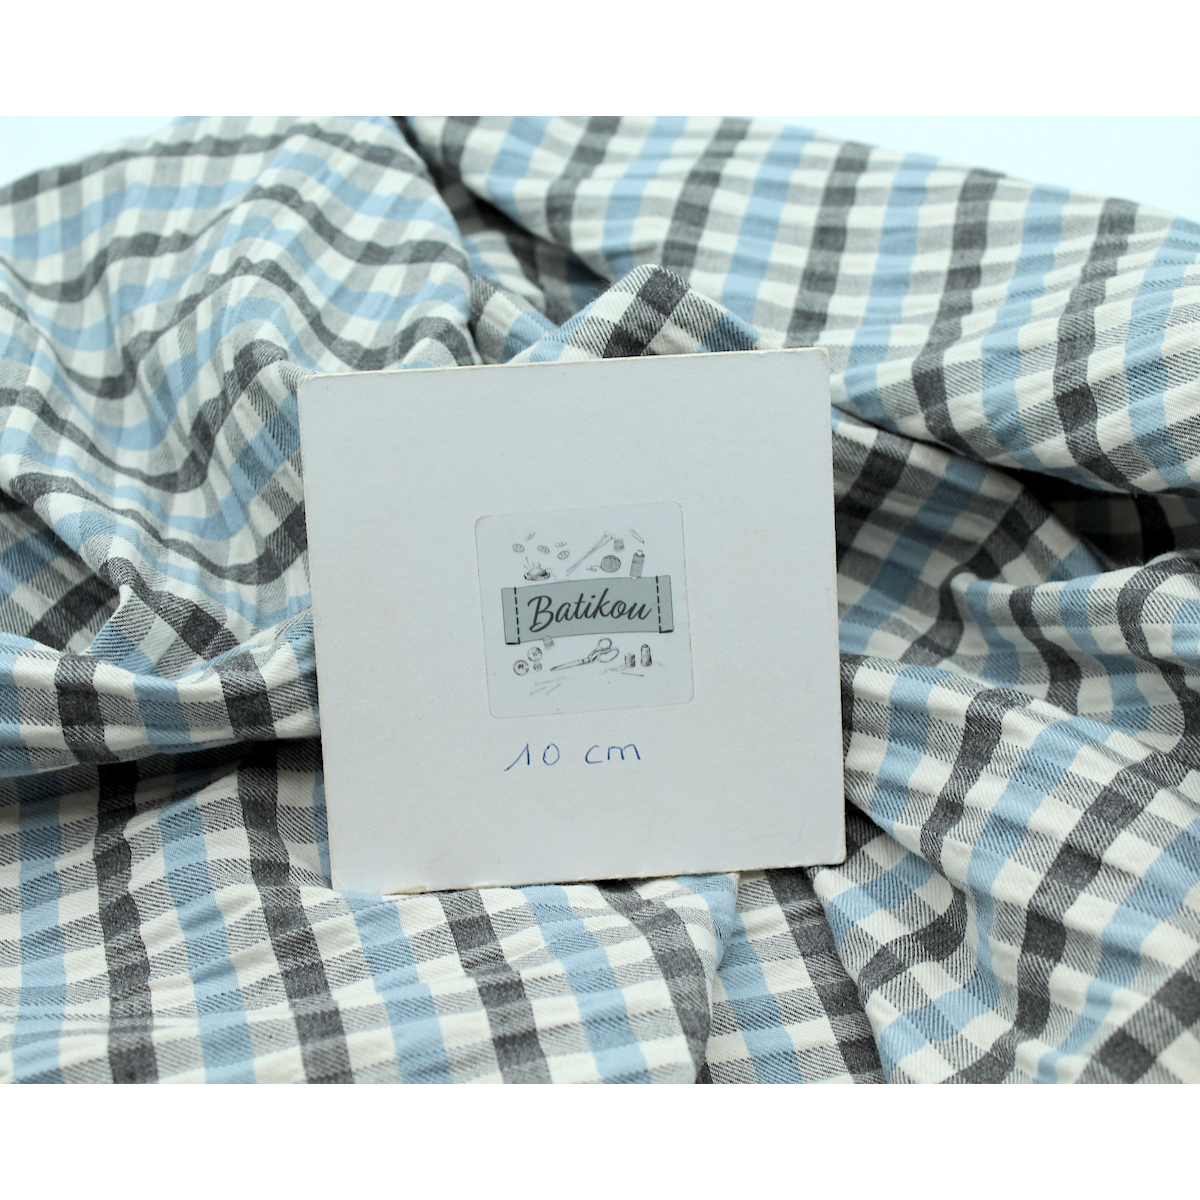 Tissu sergé de coton gaufré vichy gris / écru / bleu